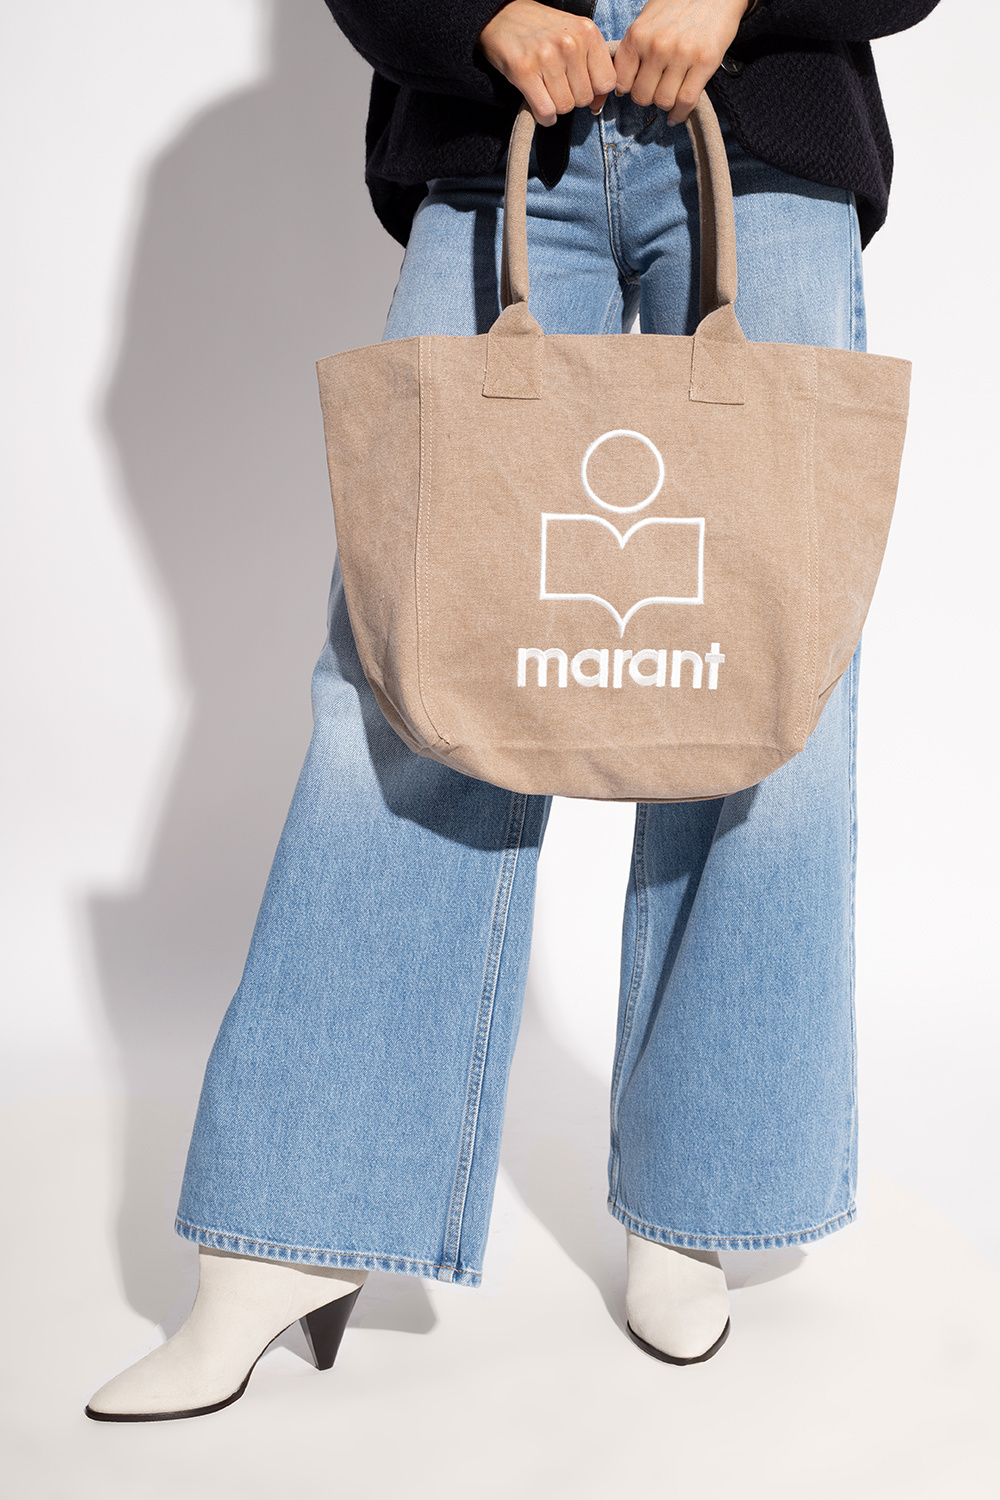 Isabel Marant 'Yenky Small' shopper bag